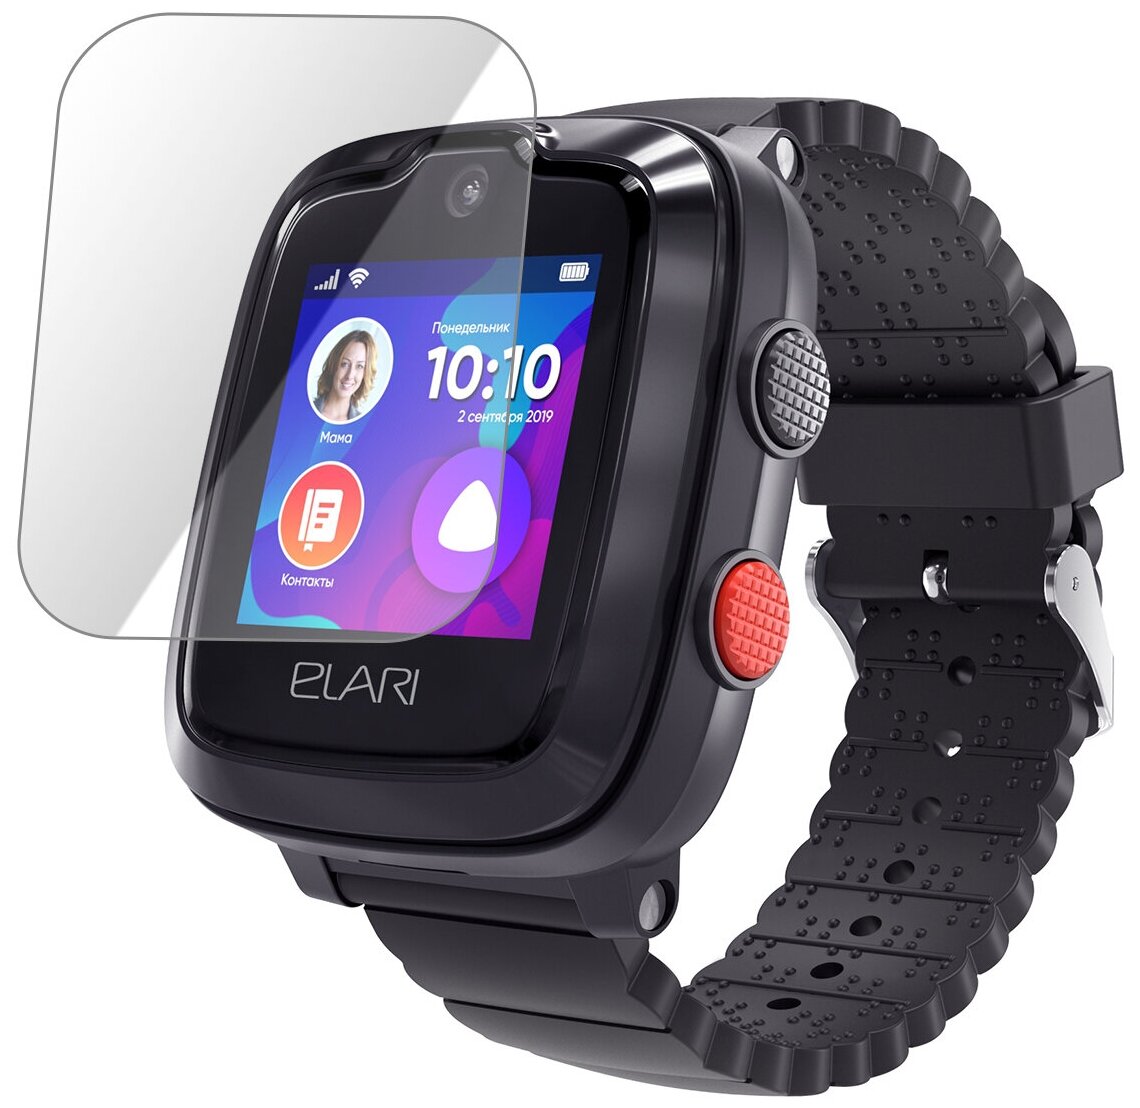 Глянцевая защитная плёнка для смарт-часов Elari KidPhone 4G, гидрогелевая, на дисплей, не стекло, watch